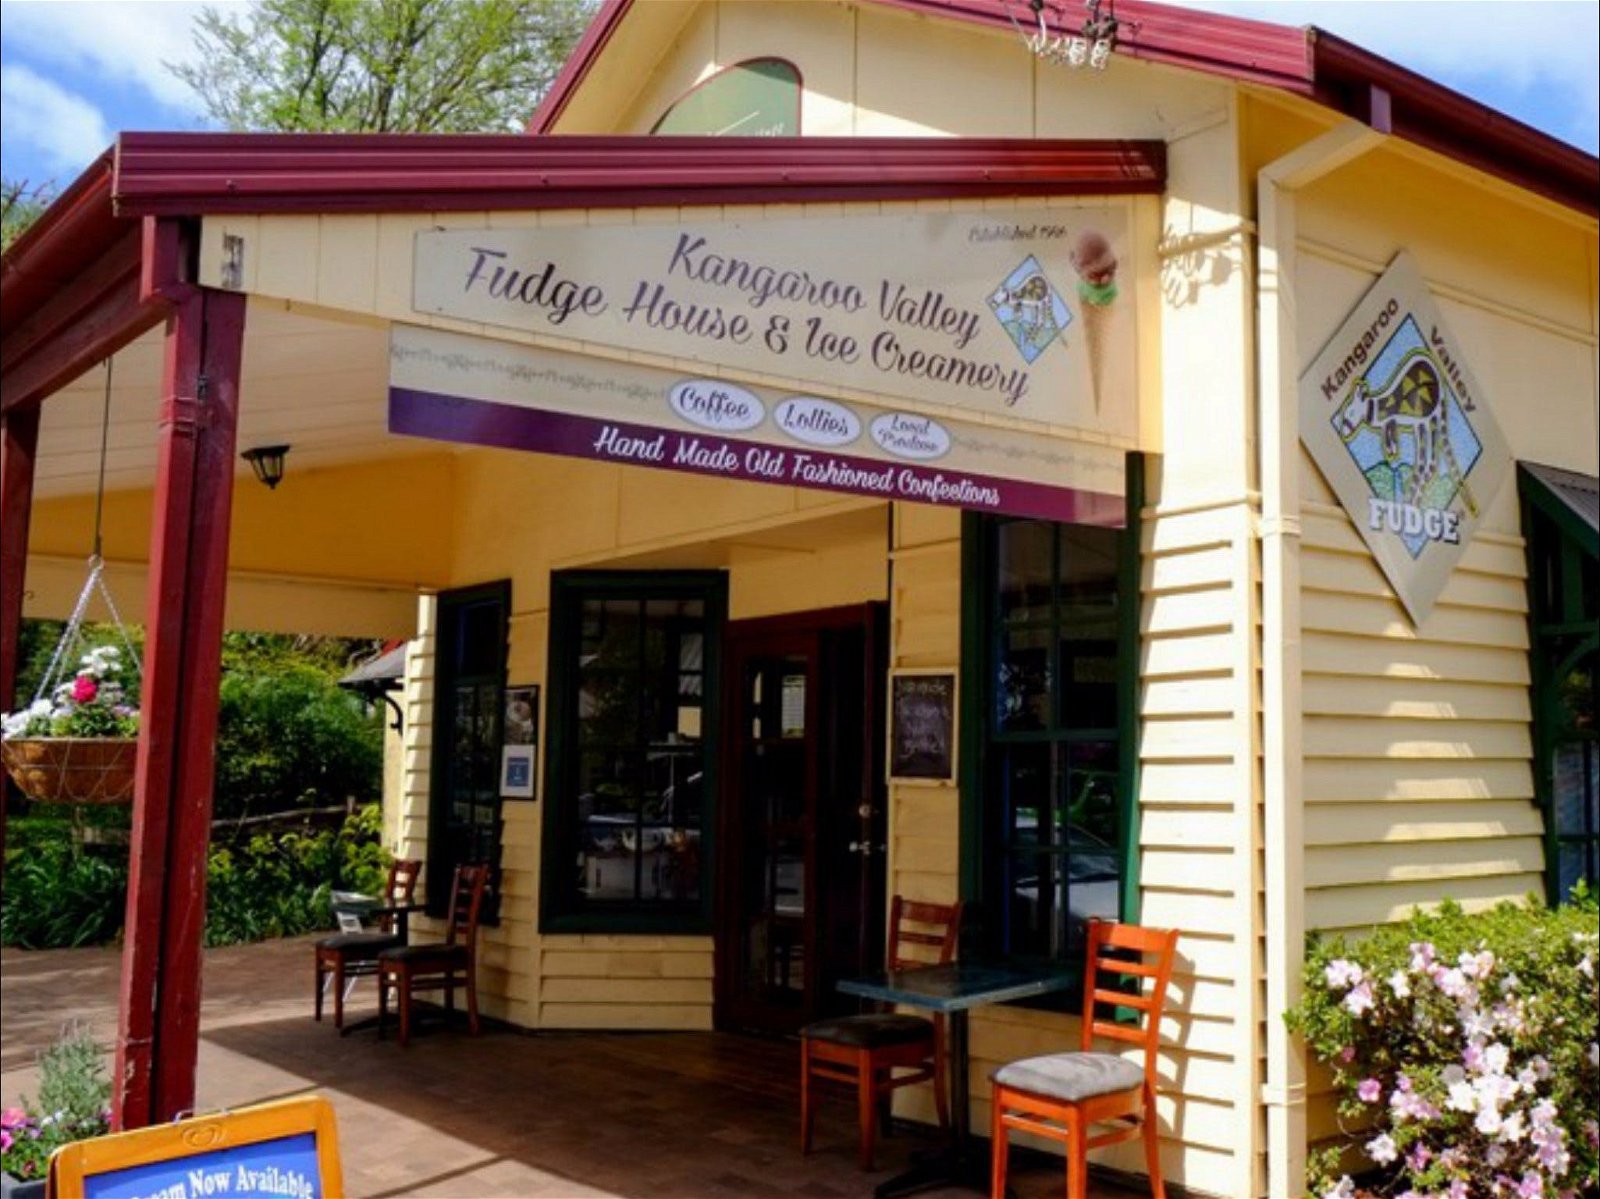 Kangaroo Valley Fudge House and Ice Creamery - Surfers Paradise Gold Coast